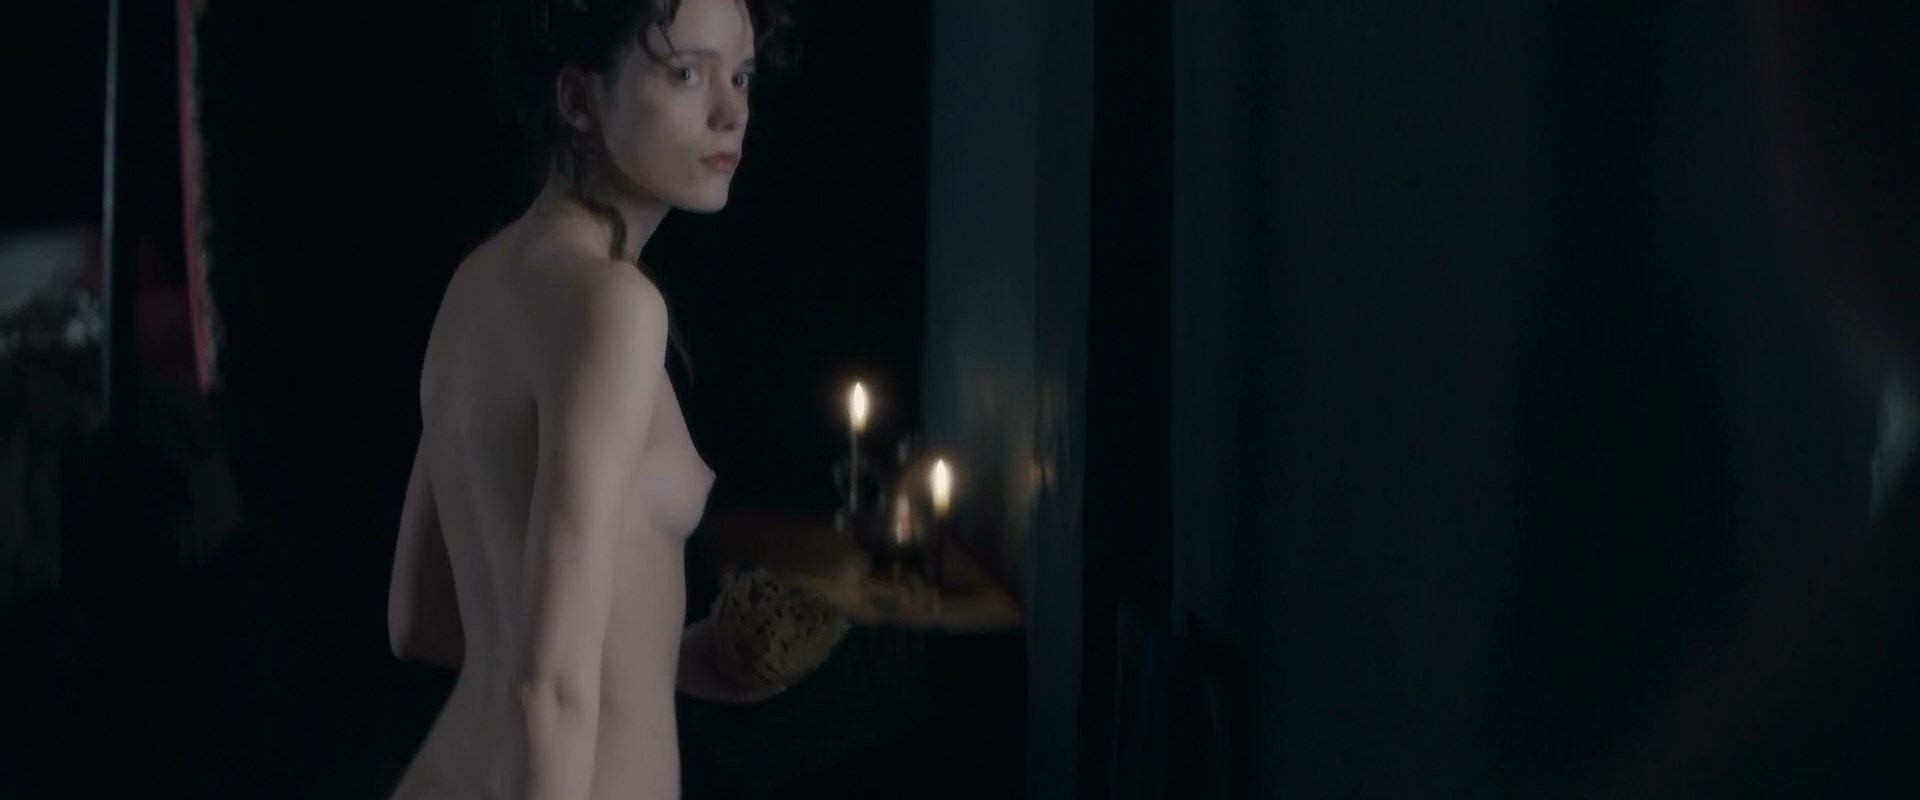 Nude Video Celebs Stacy Martin Nude Dernier Amour 2019 